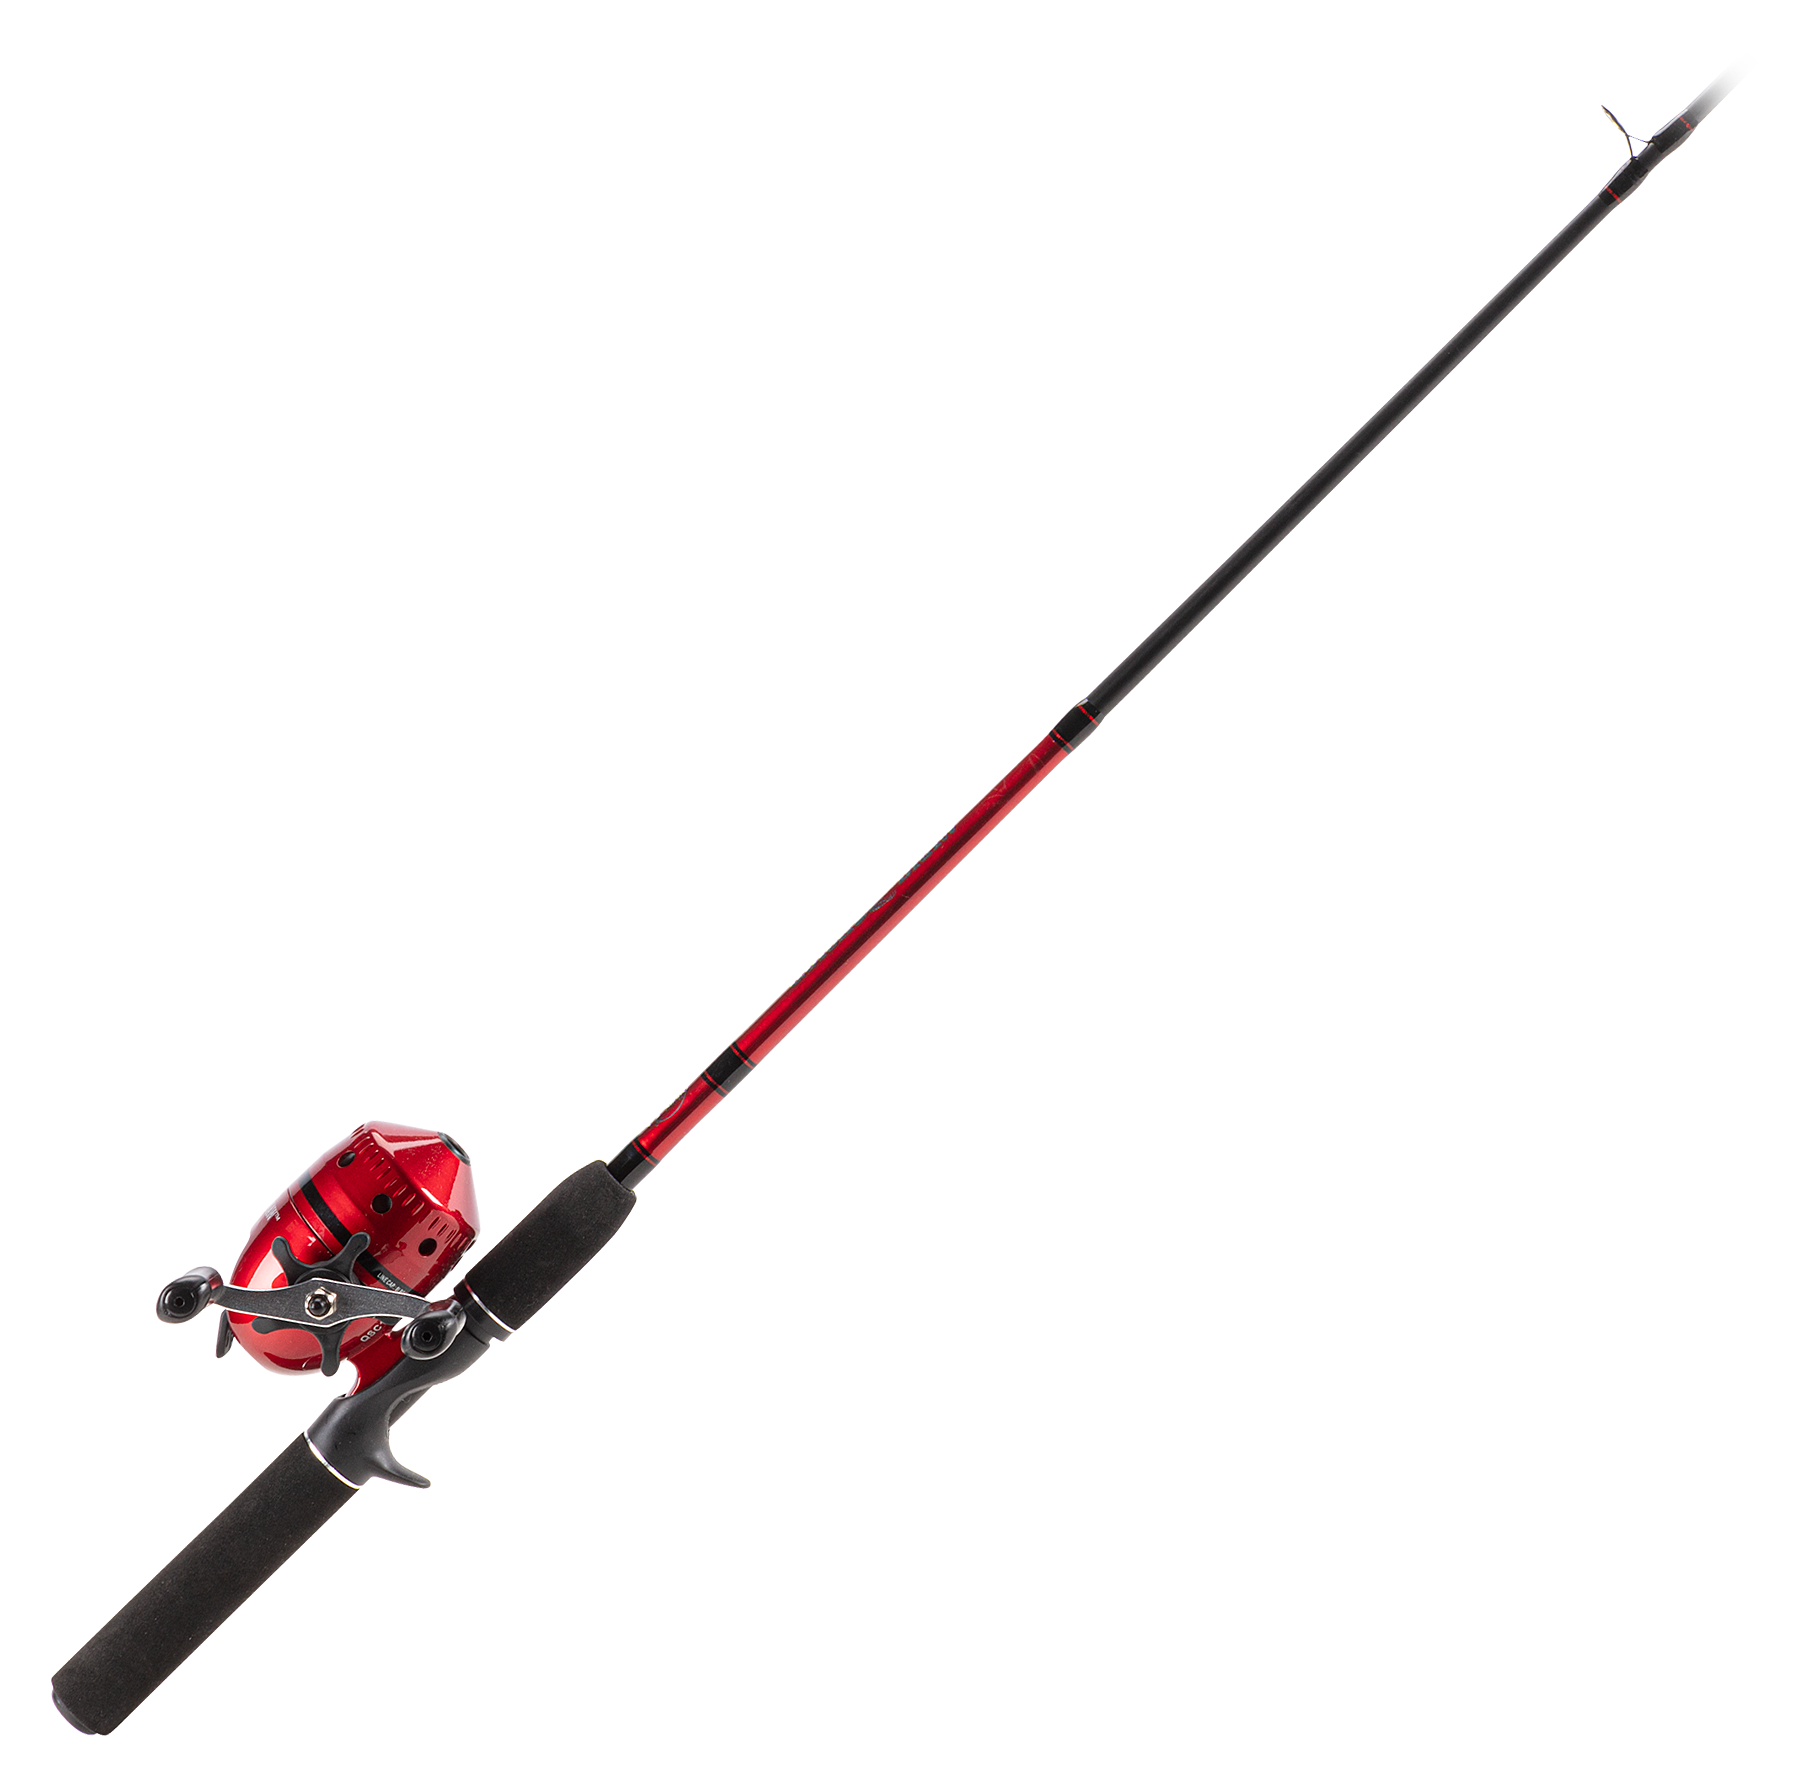 Zebco 404 Spincast Combo Rod 1545C602M.NS3, Fishing - Rod & Reel Combo  Type: Spincasting, Fishing - Rod Pieces: 2 Pieces